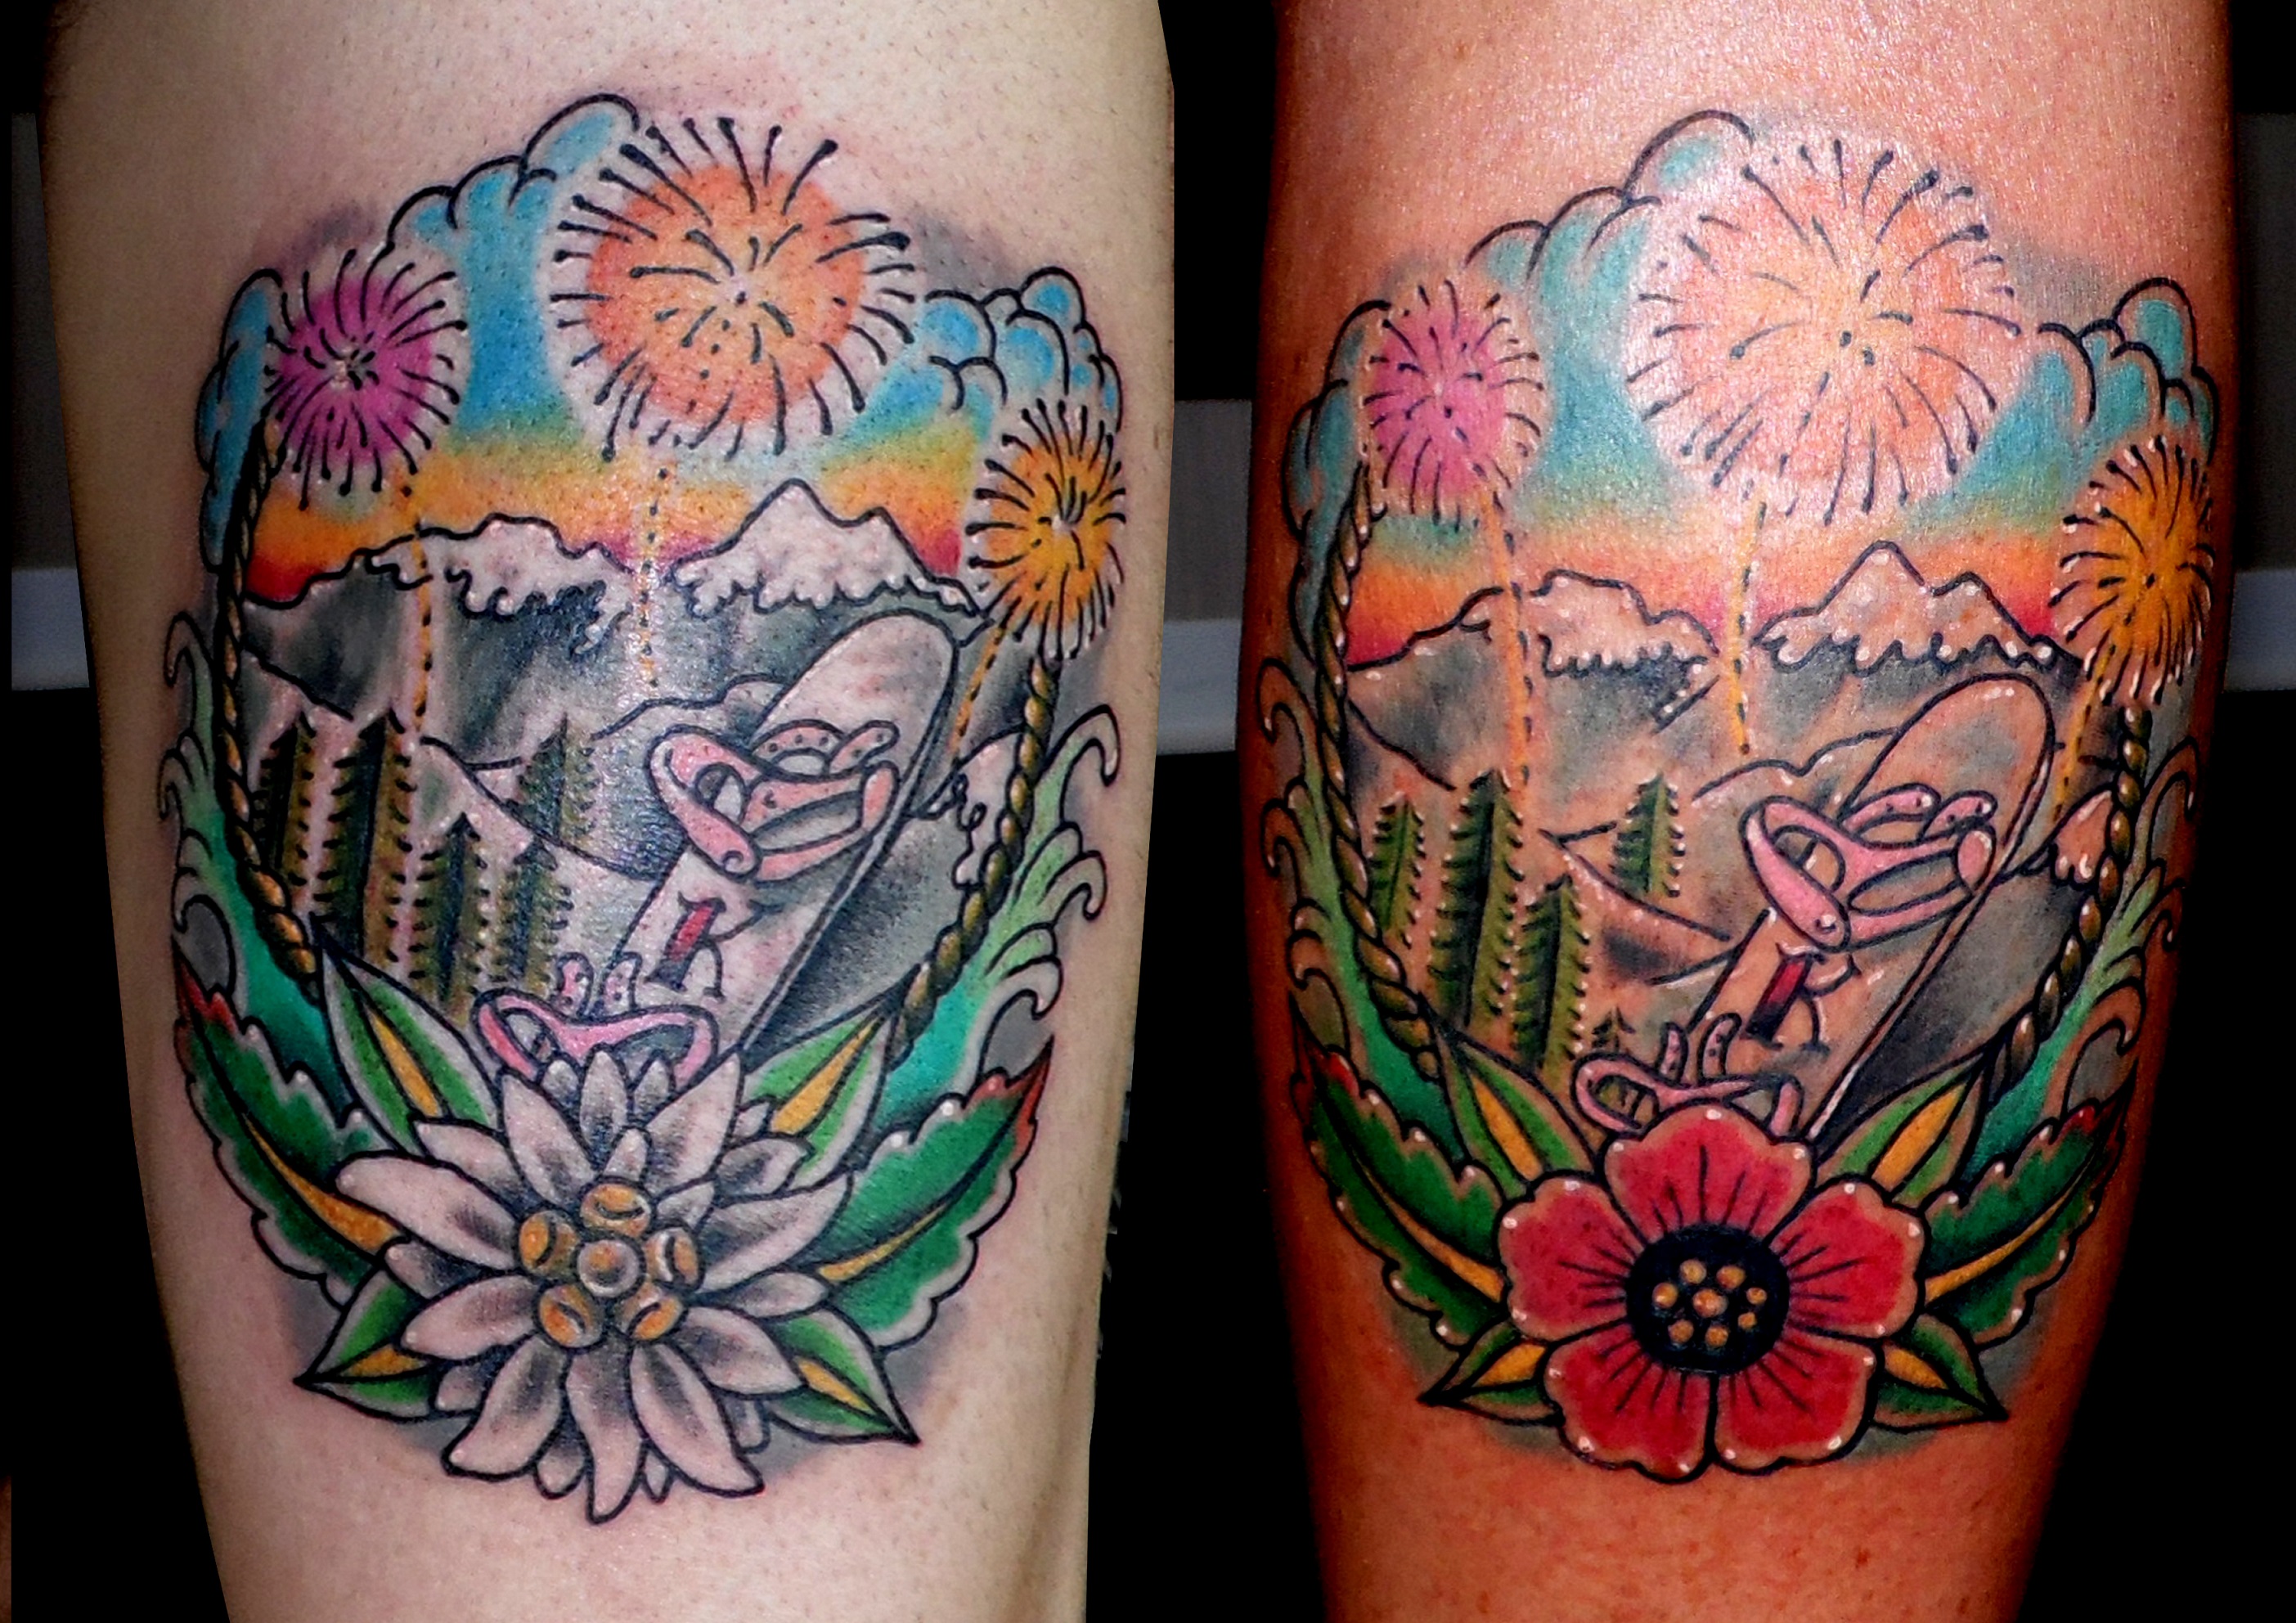 tatuaje tattoo tradicional old school color montaña flores nieve olas 13depicas Jaca Huesca